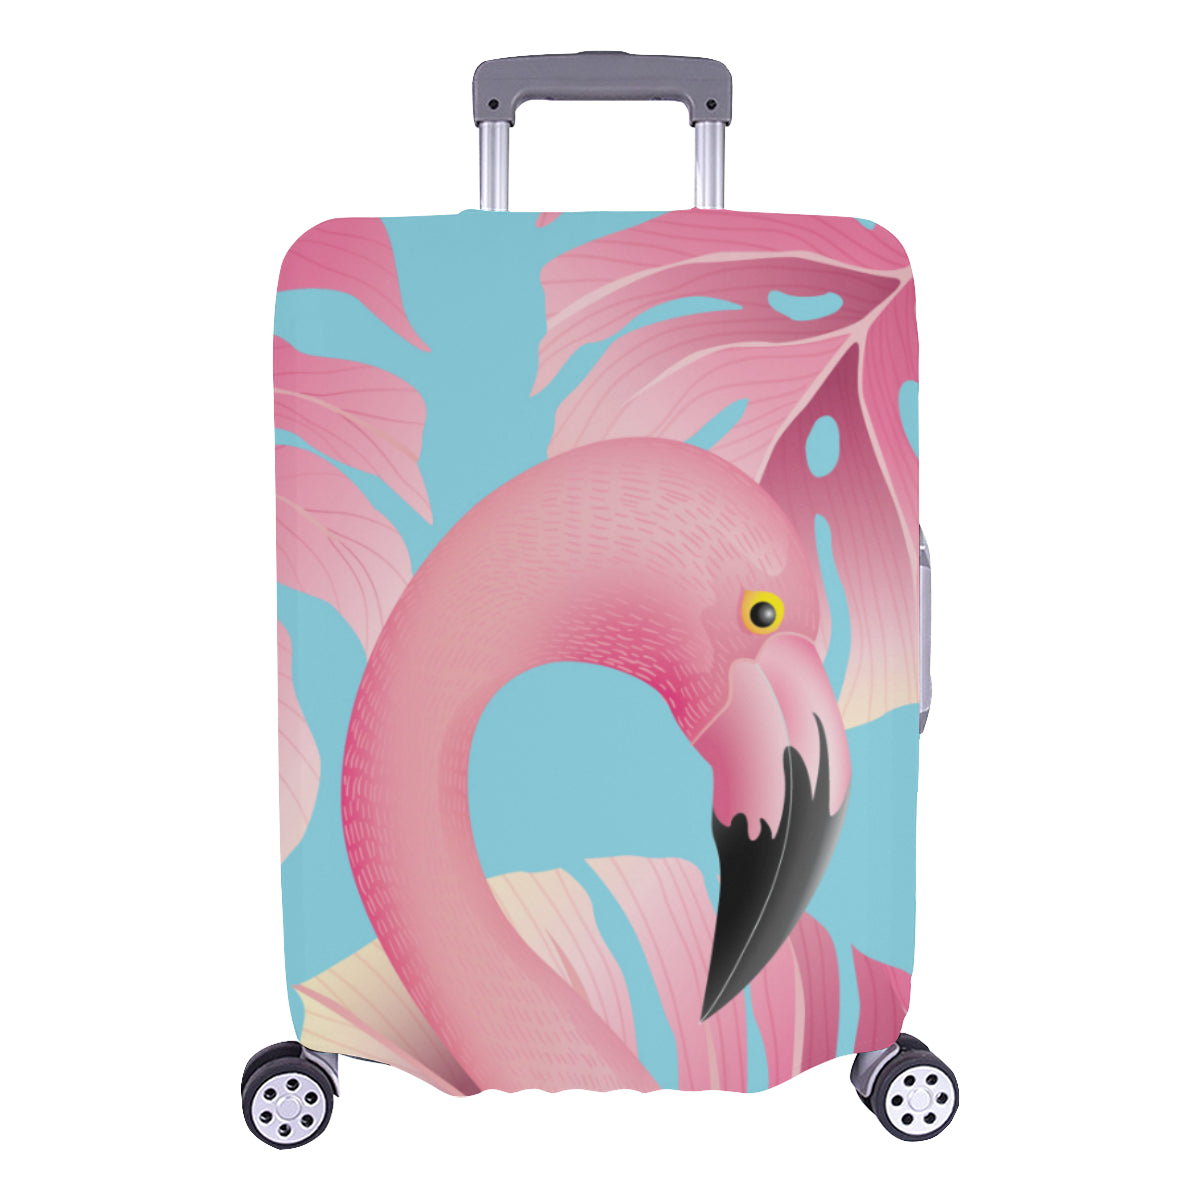 Flamingo Luggage Covers - The Flamingo Shop